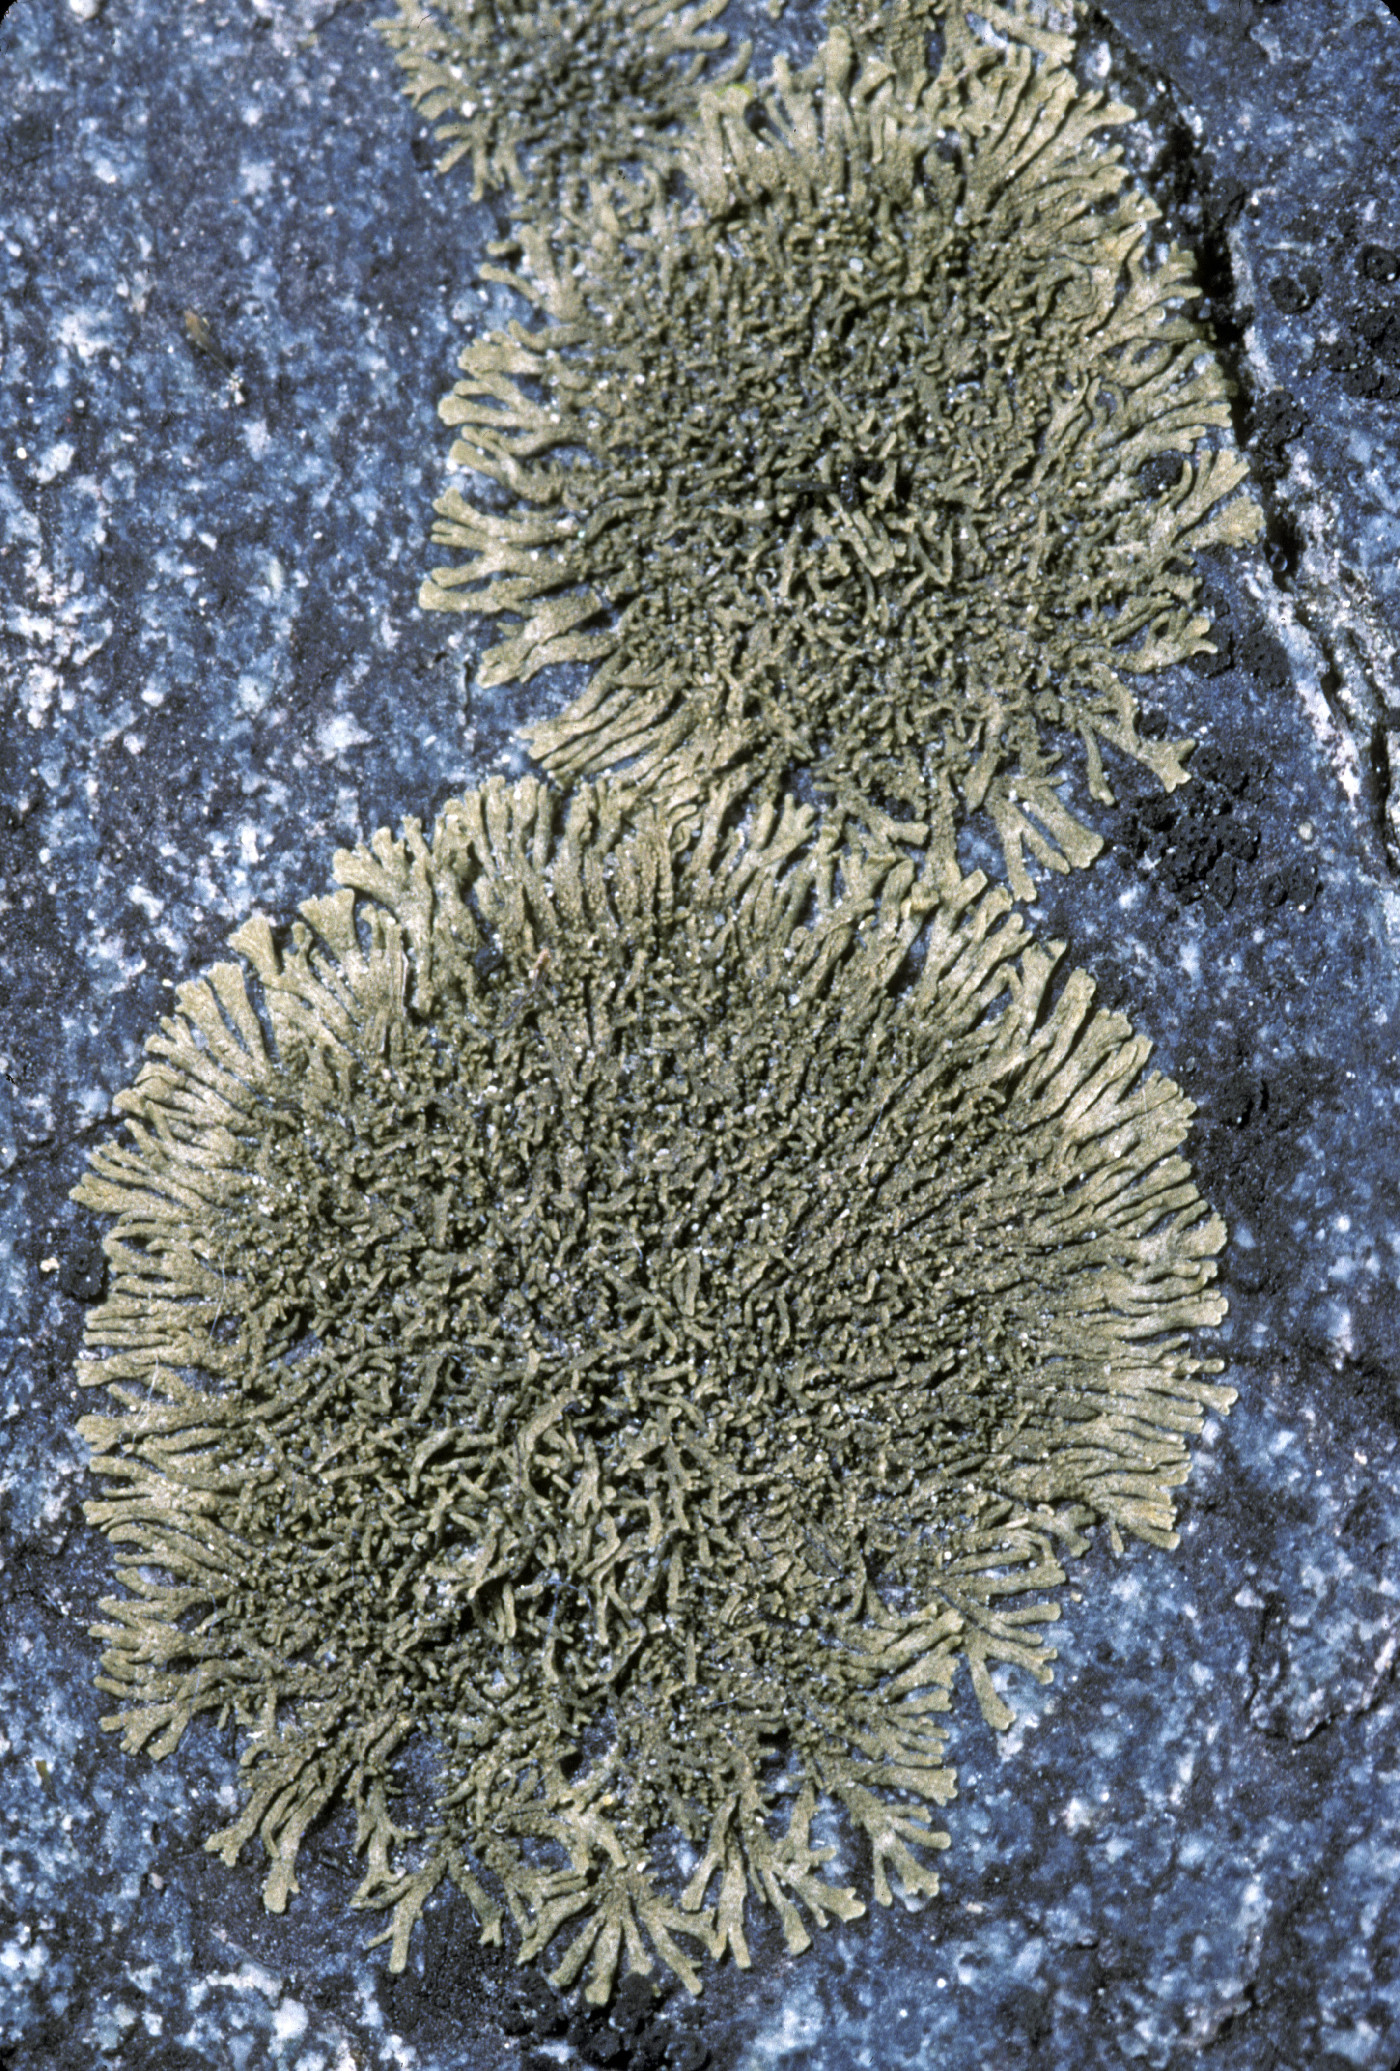 Tingiopsidium isidiatum image